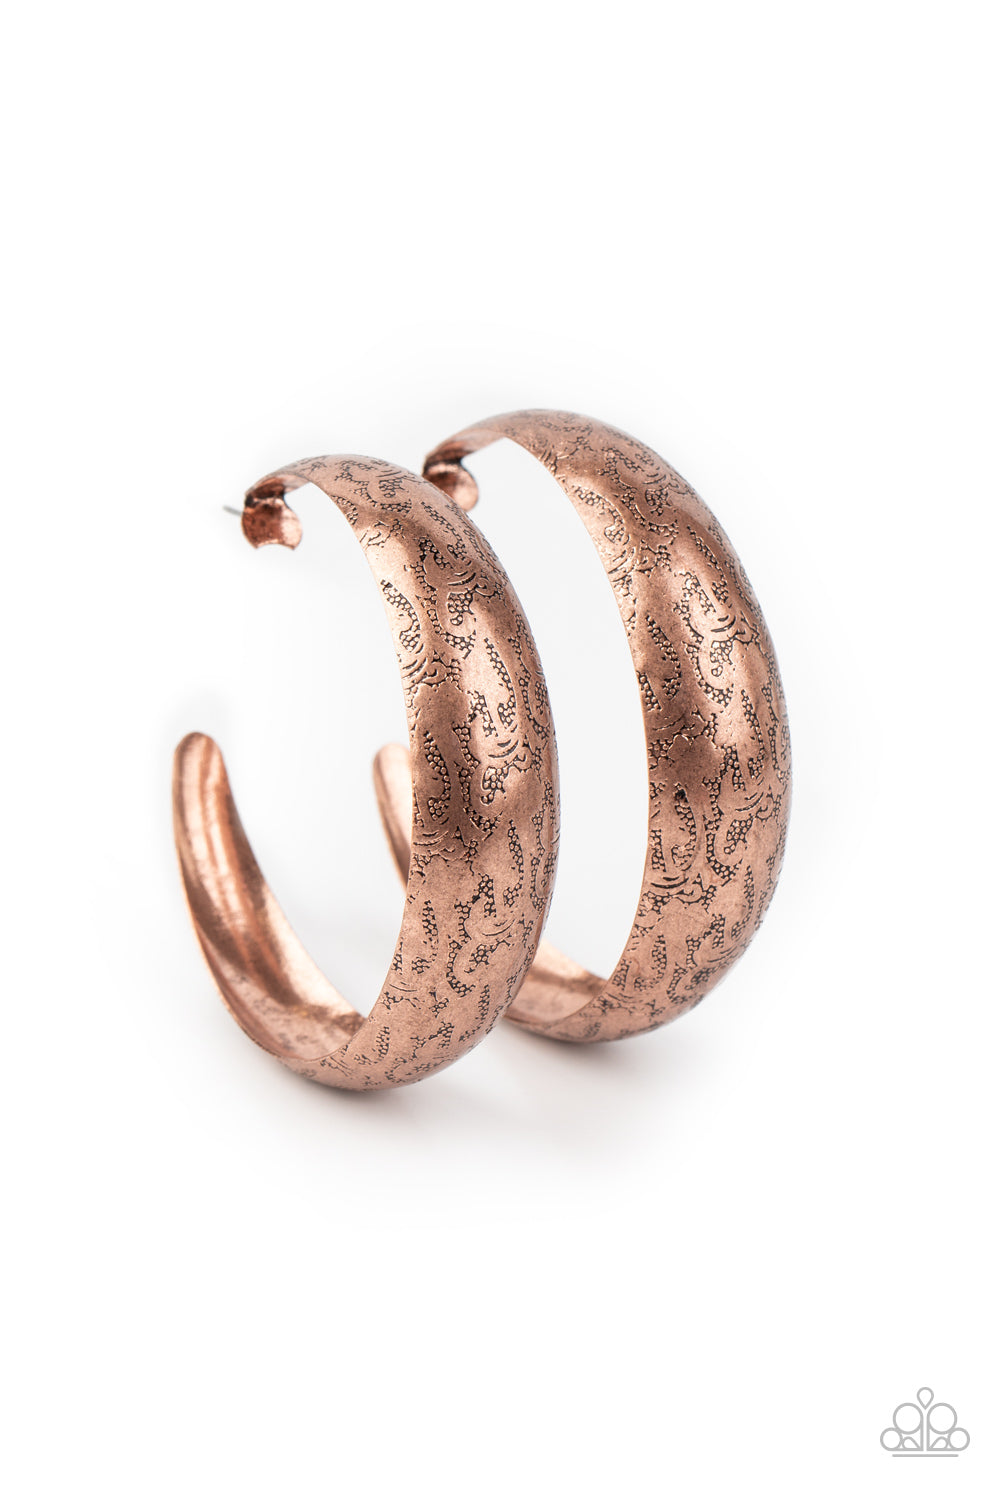 Sahara Sandstorm - copper - Paparazzi earrings